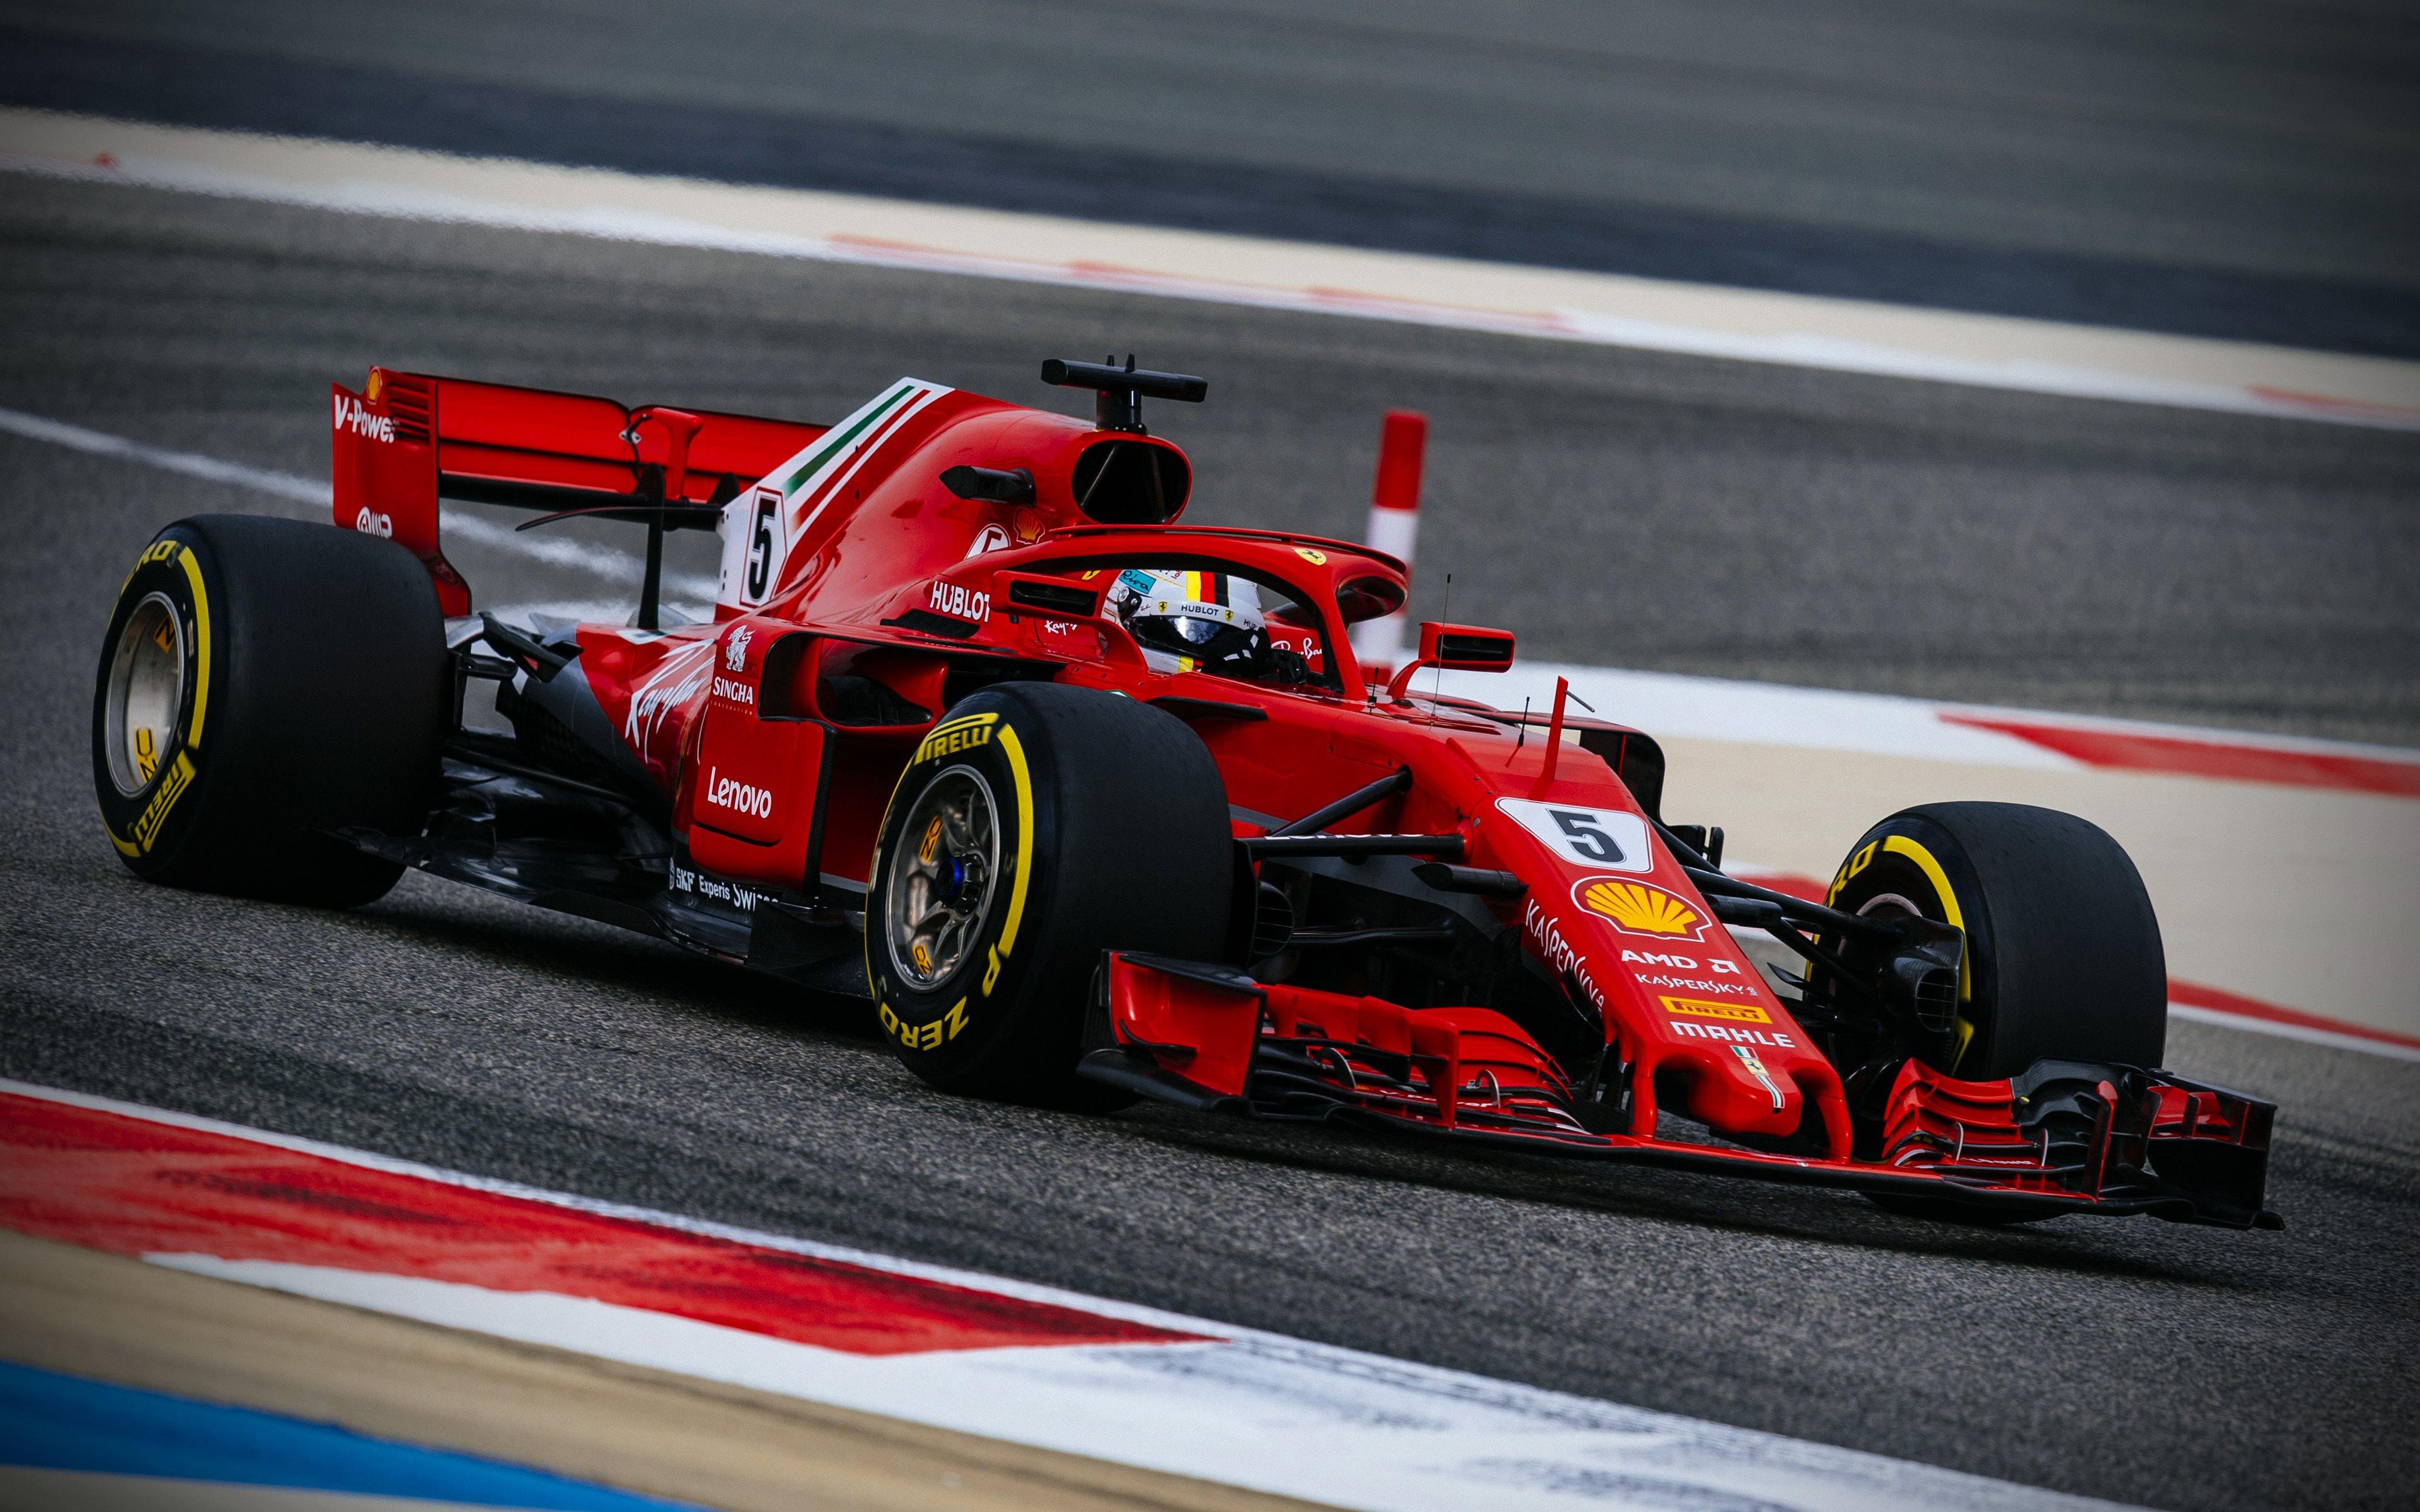 Vettel Wallpapers  Top Free Vettel Backgrounds  WallpaperAccess